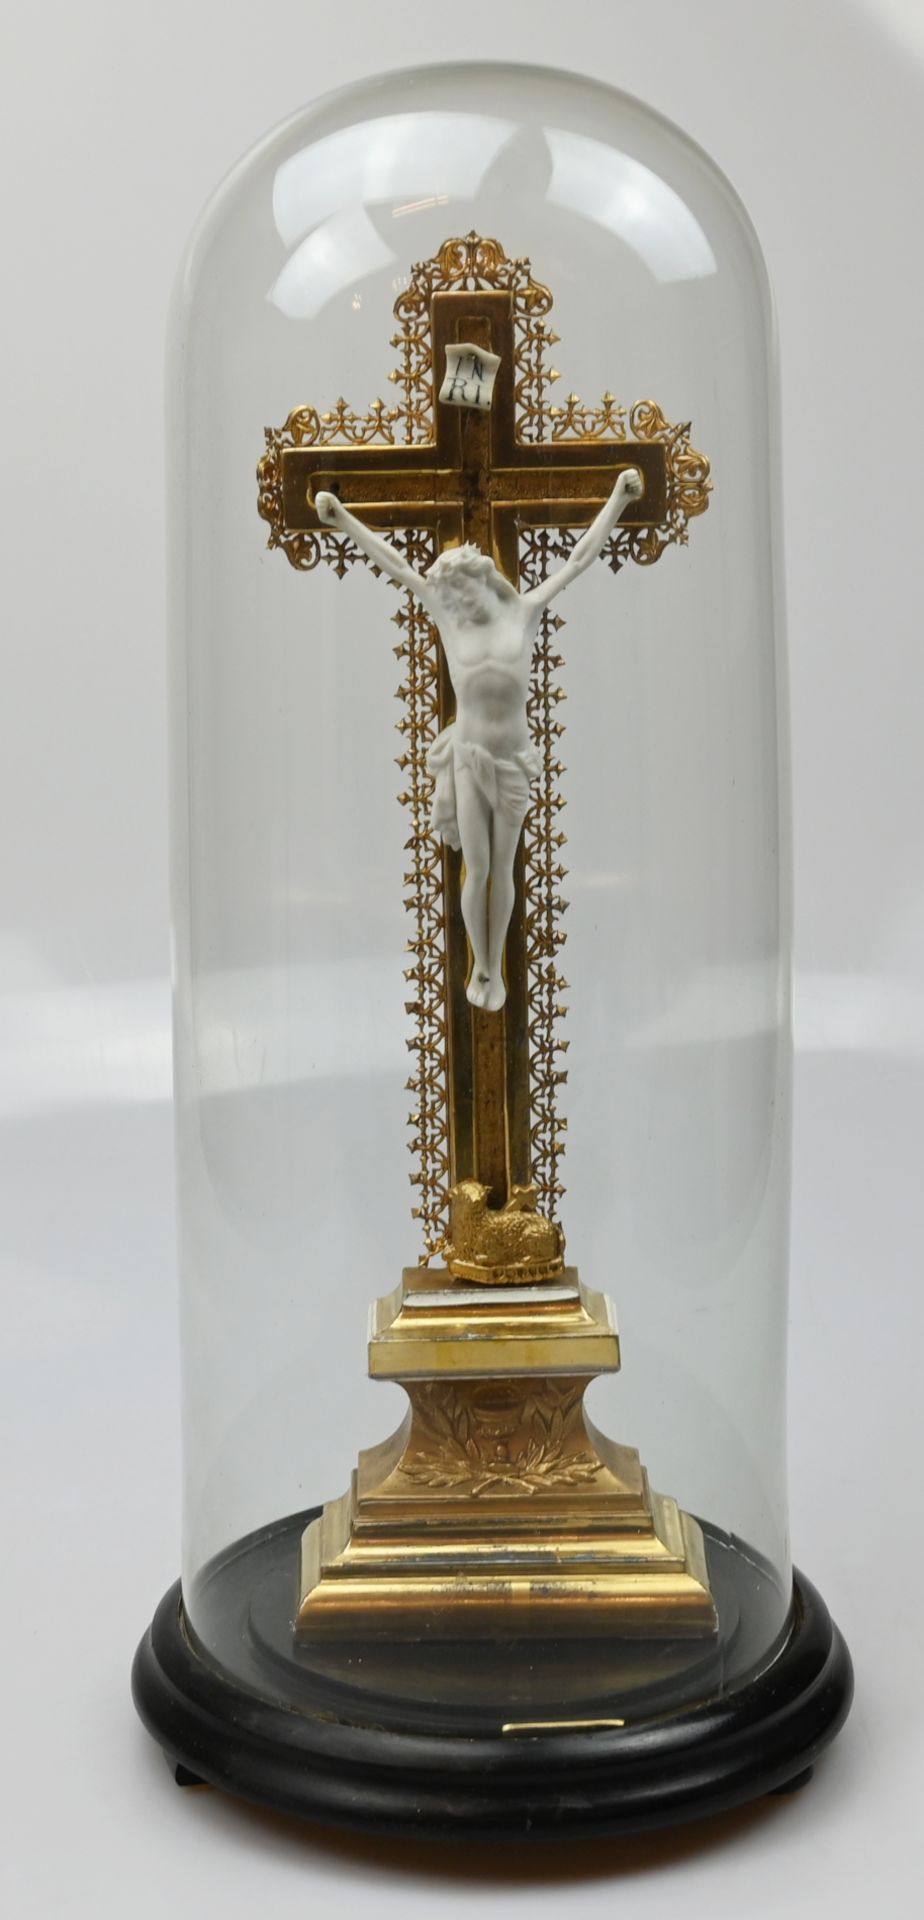 1 Kruzifix wohl 20. Jh. Holz/Stuck vergoldet, Christusfigur aus Bisquitporzellan, ca. H 47cm, mit Gl